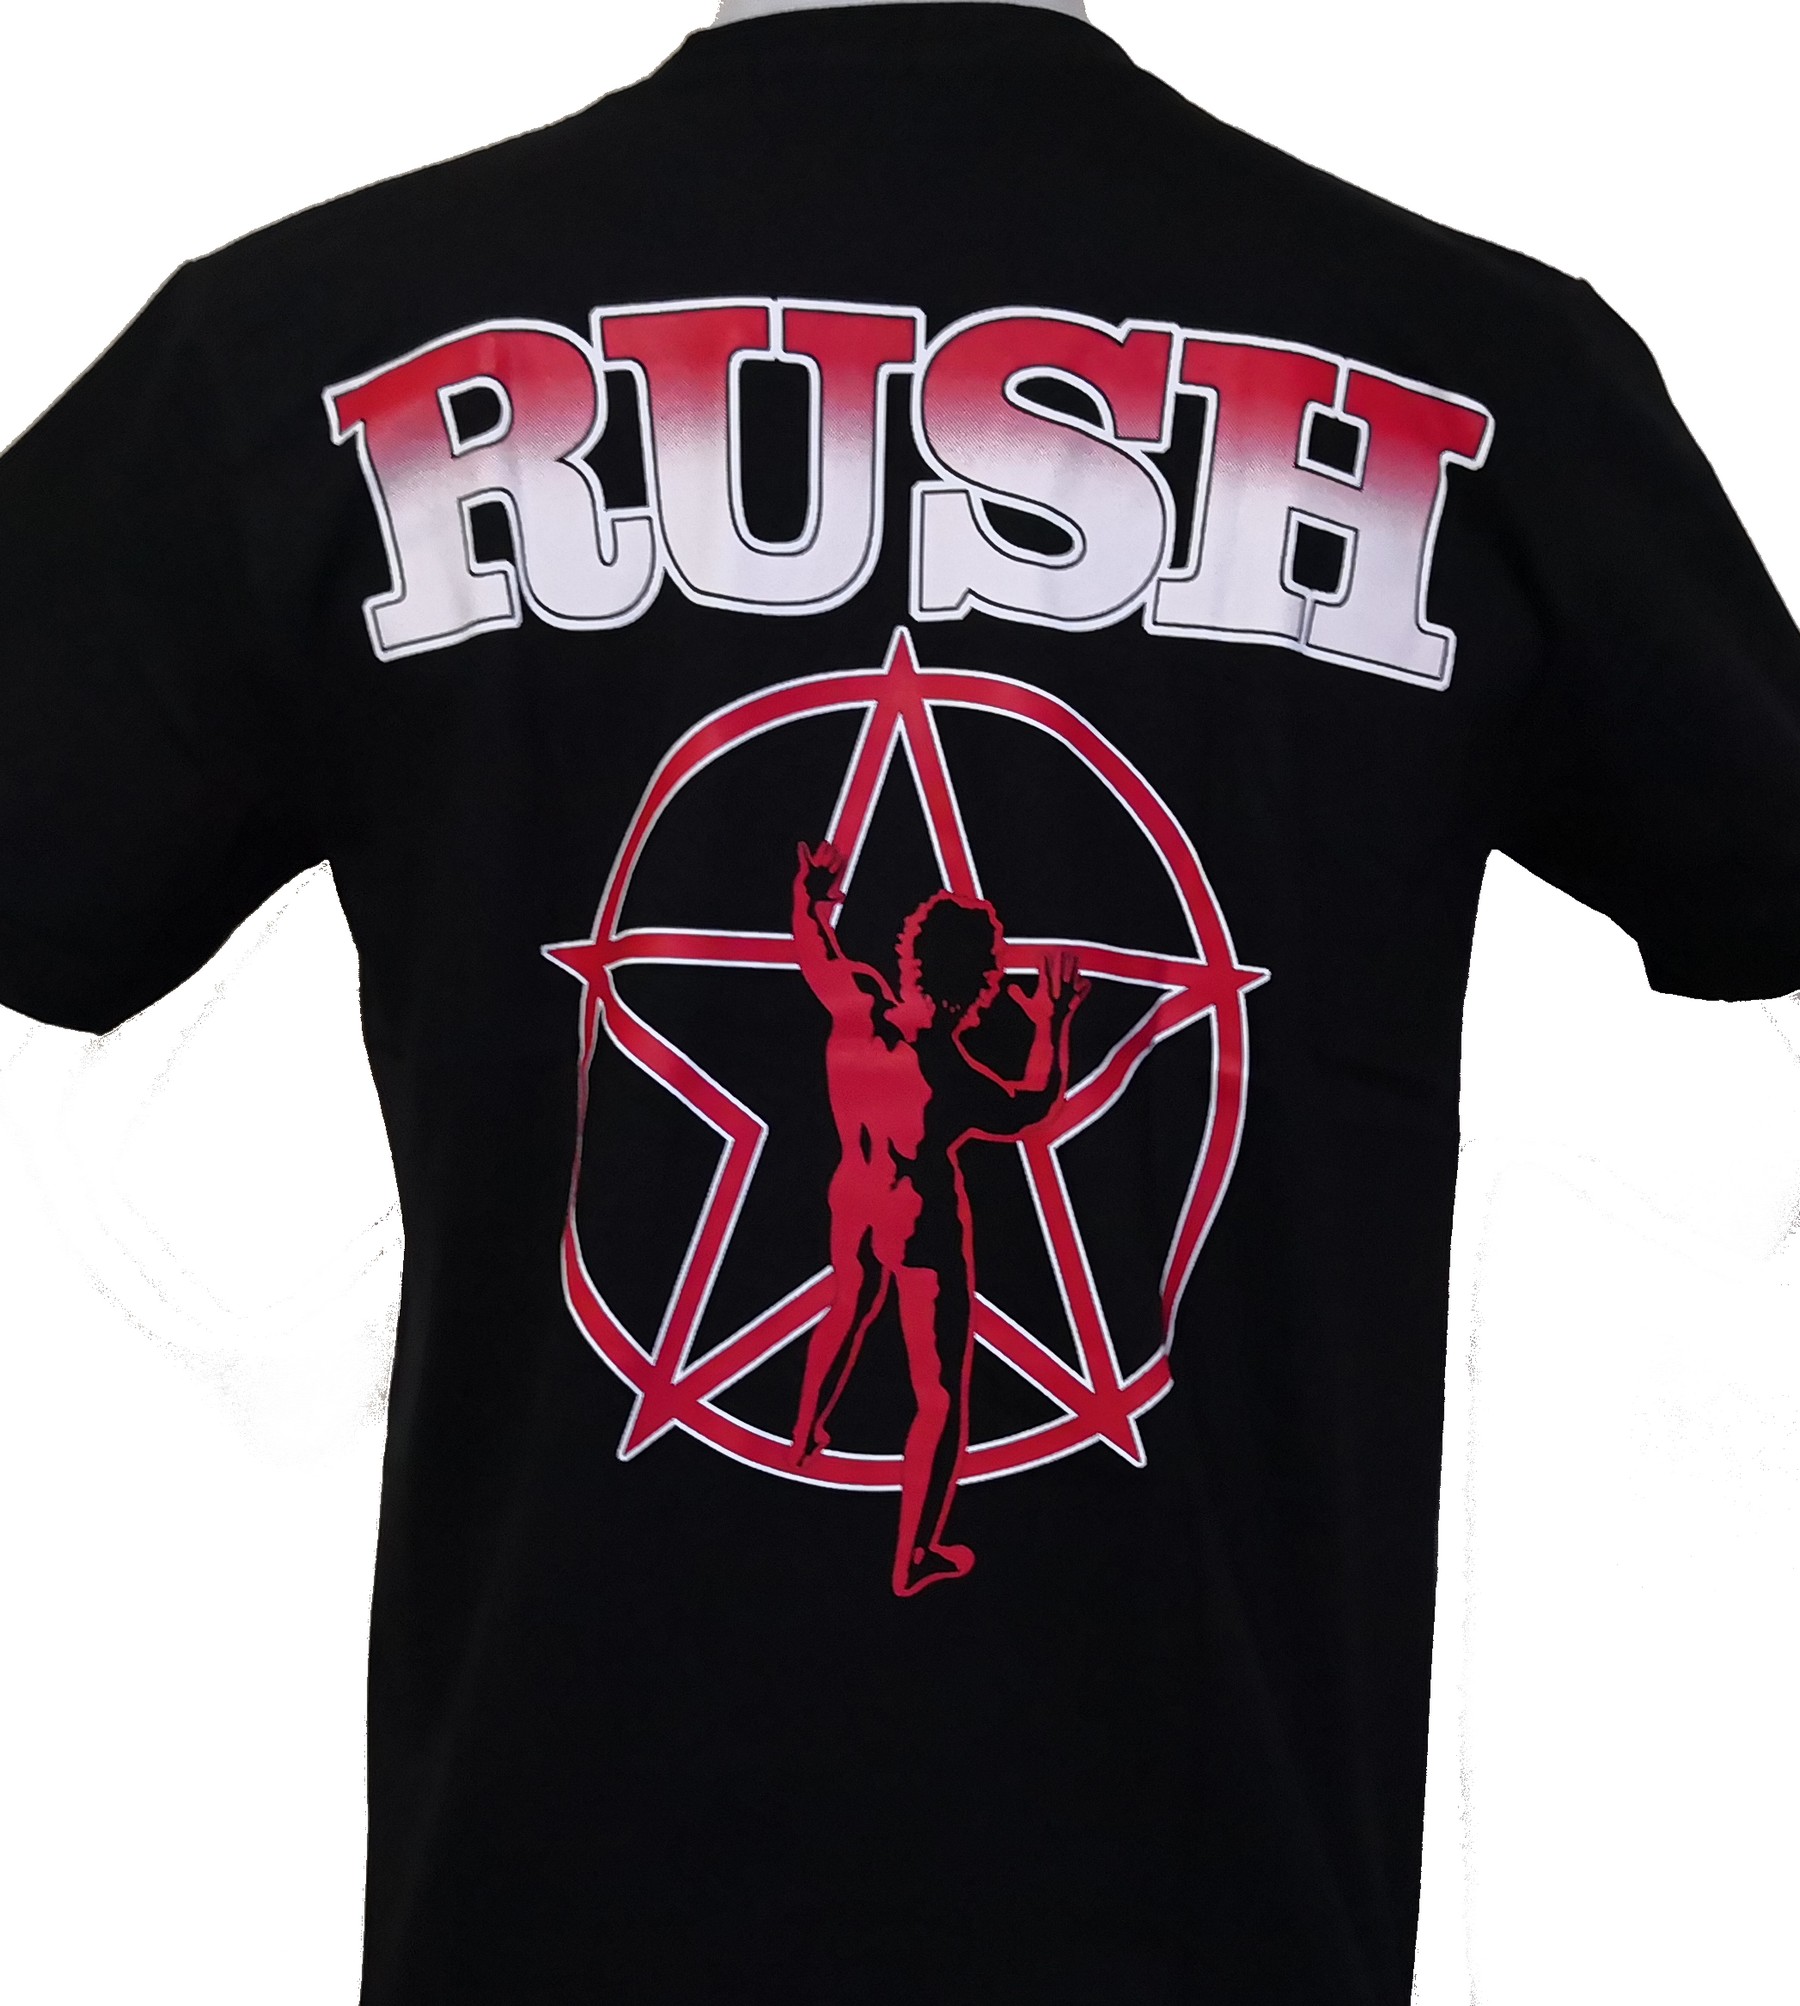 Rush t-shirt size S – RoxxBKK